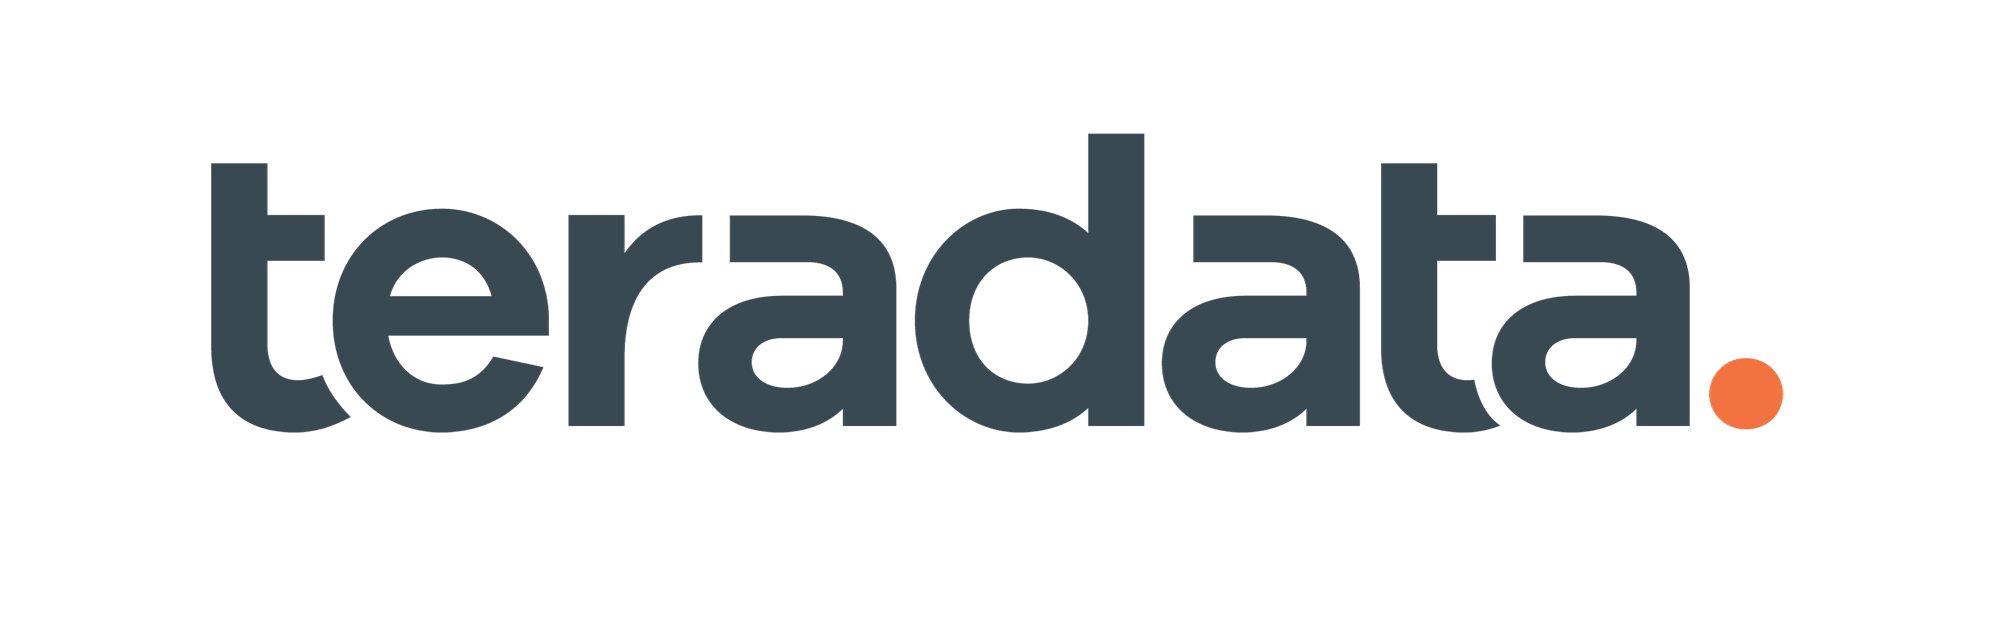 Logo Teradata Corporation